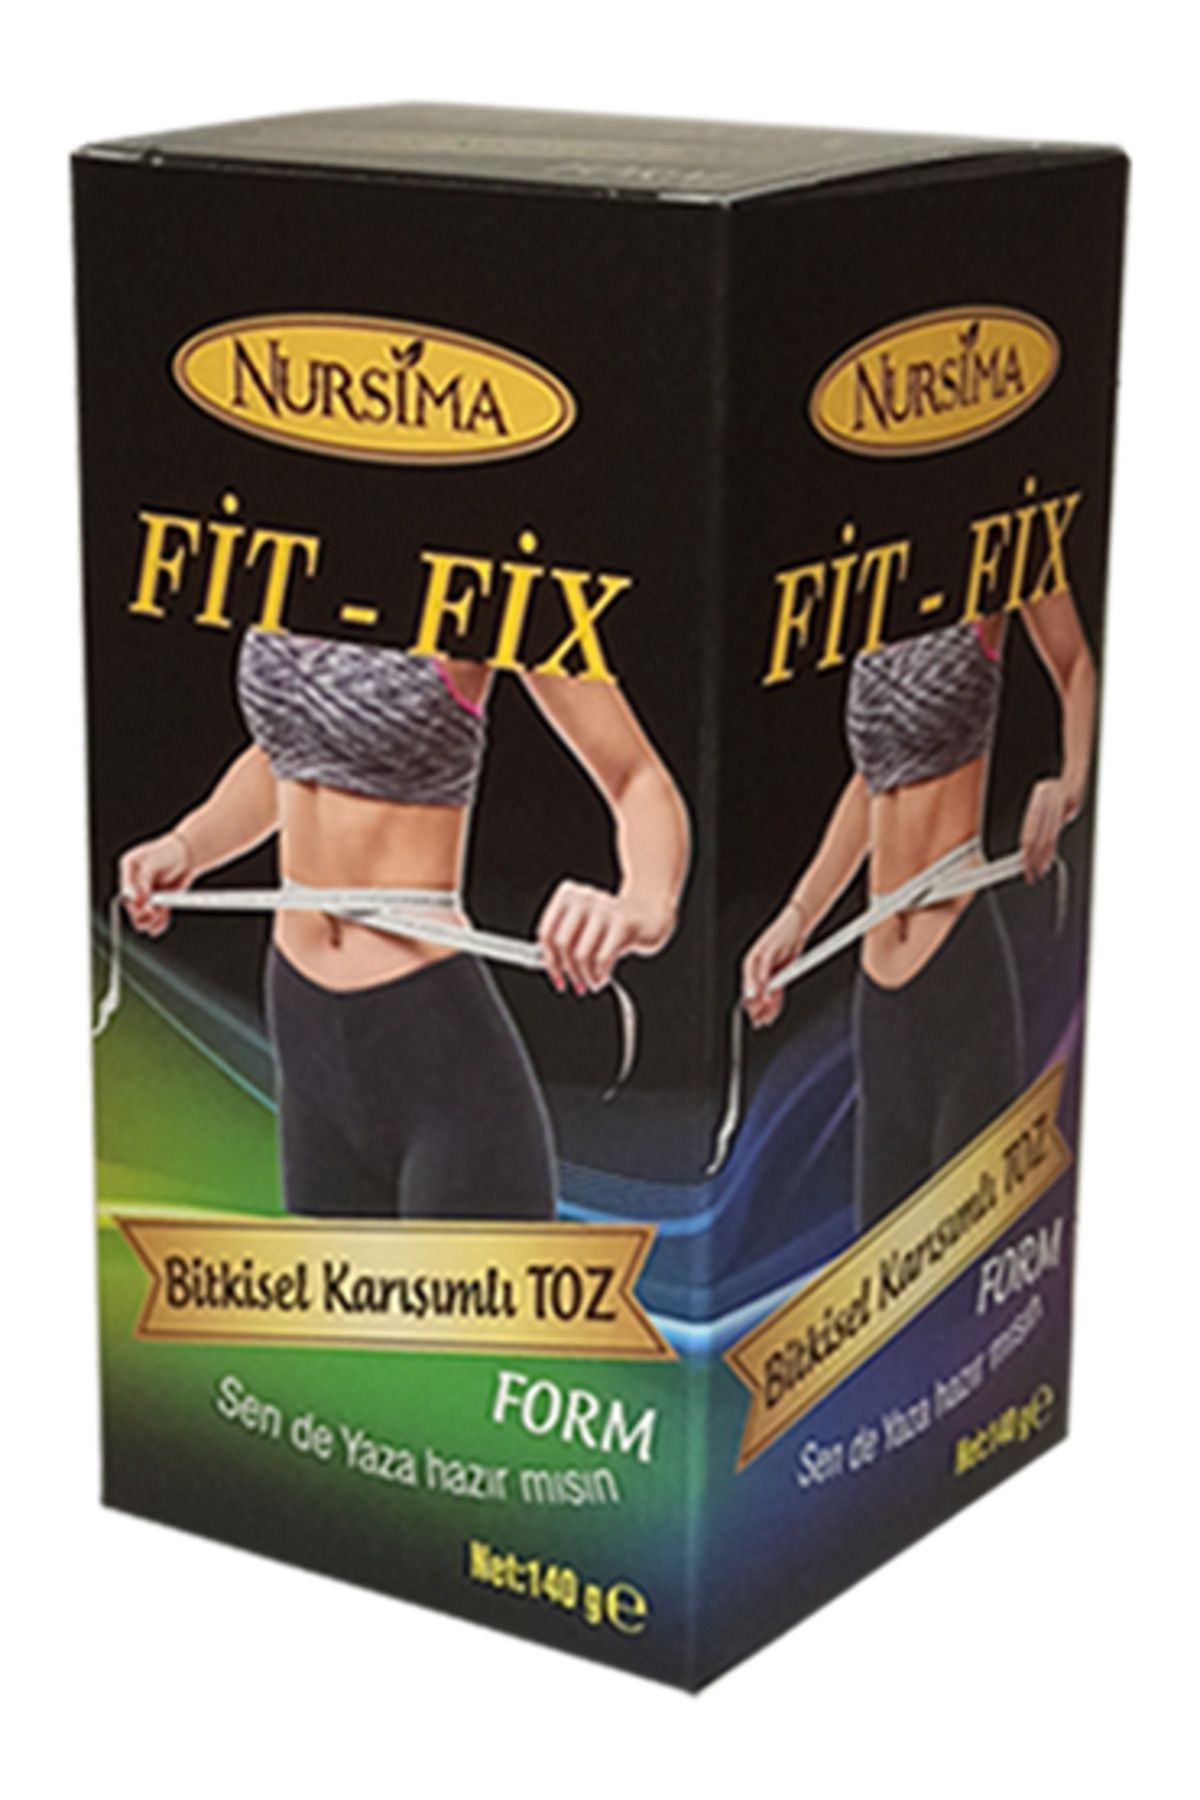 Nursima Fit - Fix Bitkisel Karışımlı Toz 140 Gr